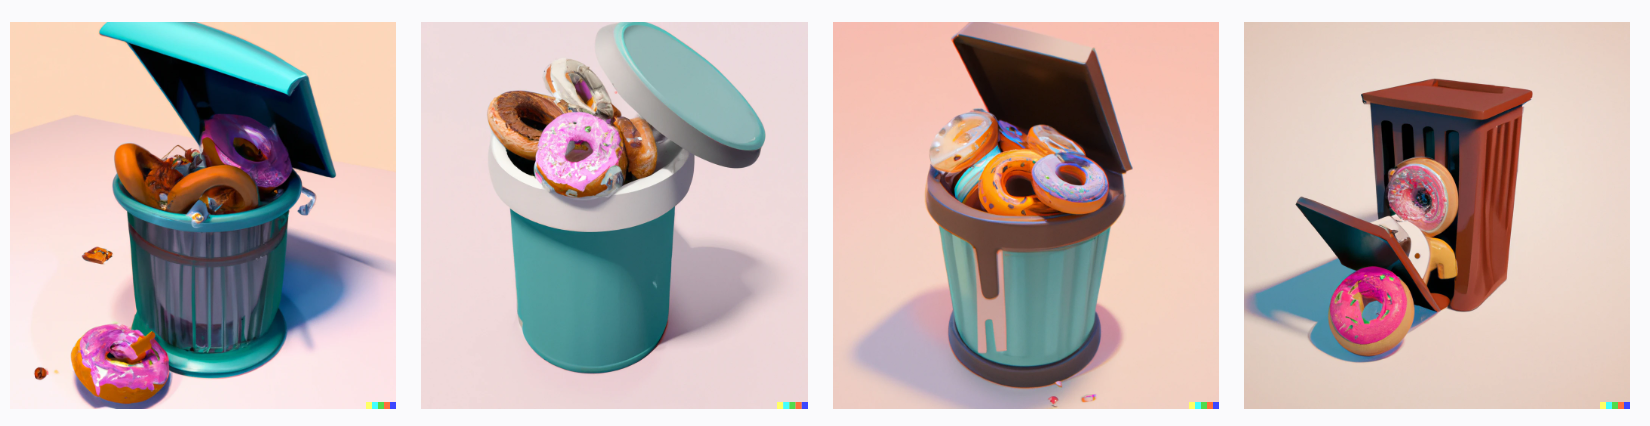 Trashcan half-open with donuts inside, digital art